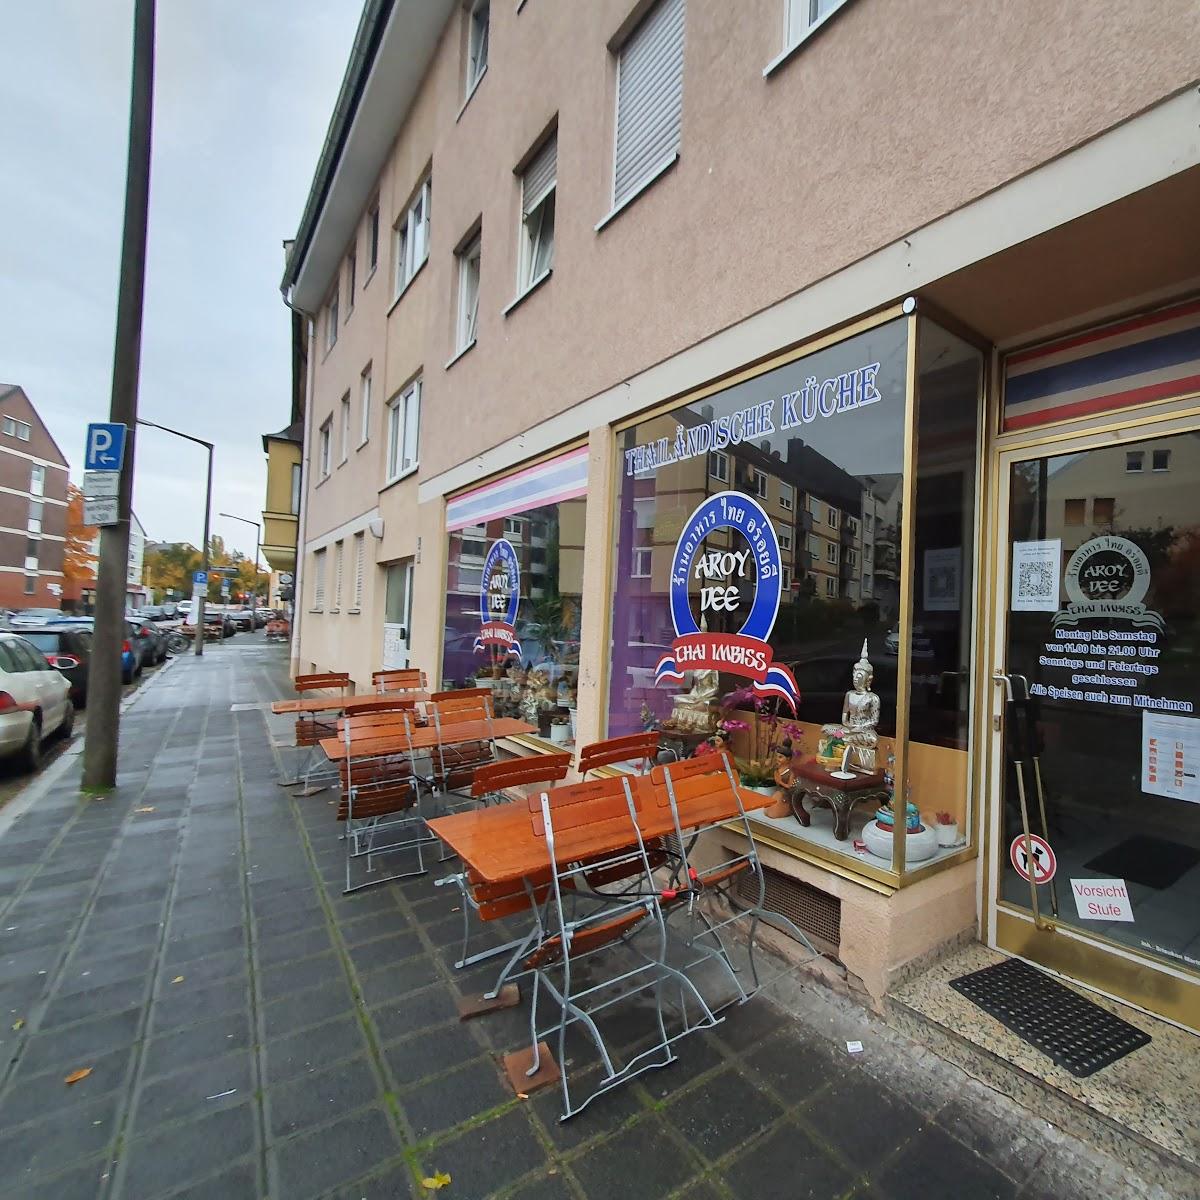 Restaurant "Aroy Dee Thai Imbiss" in Nürnberg